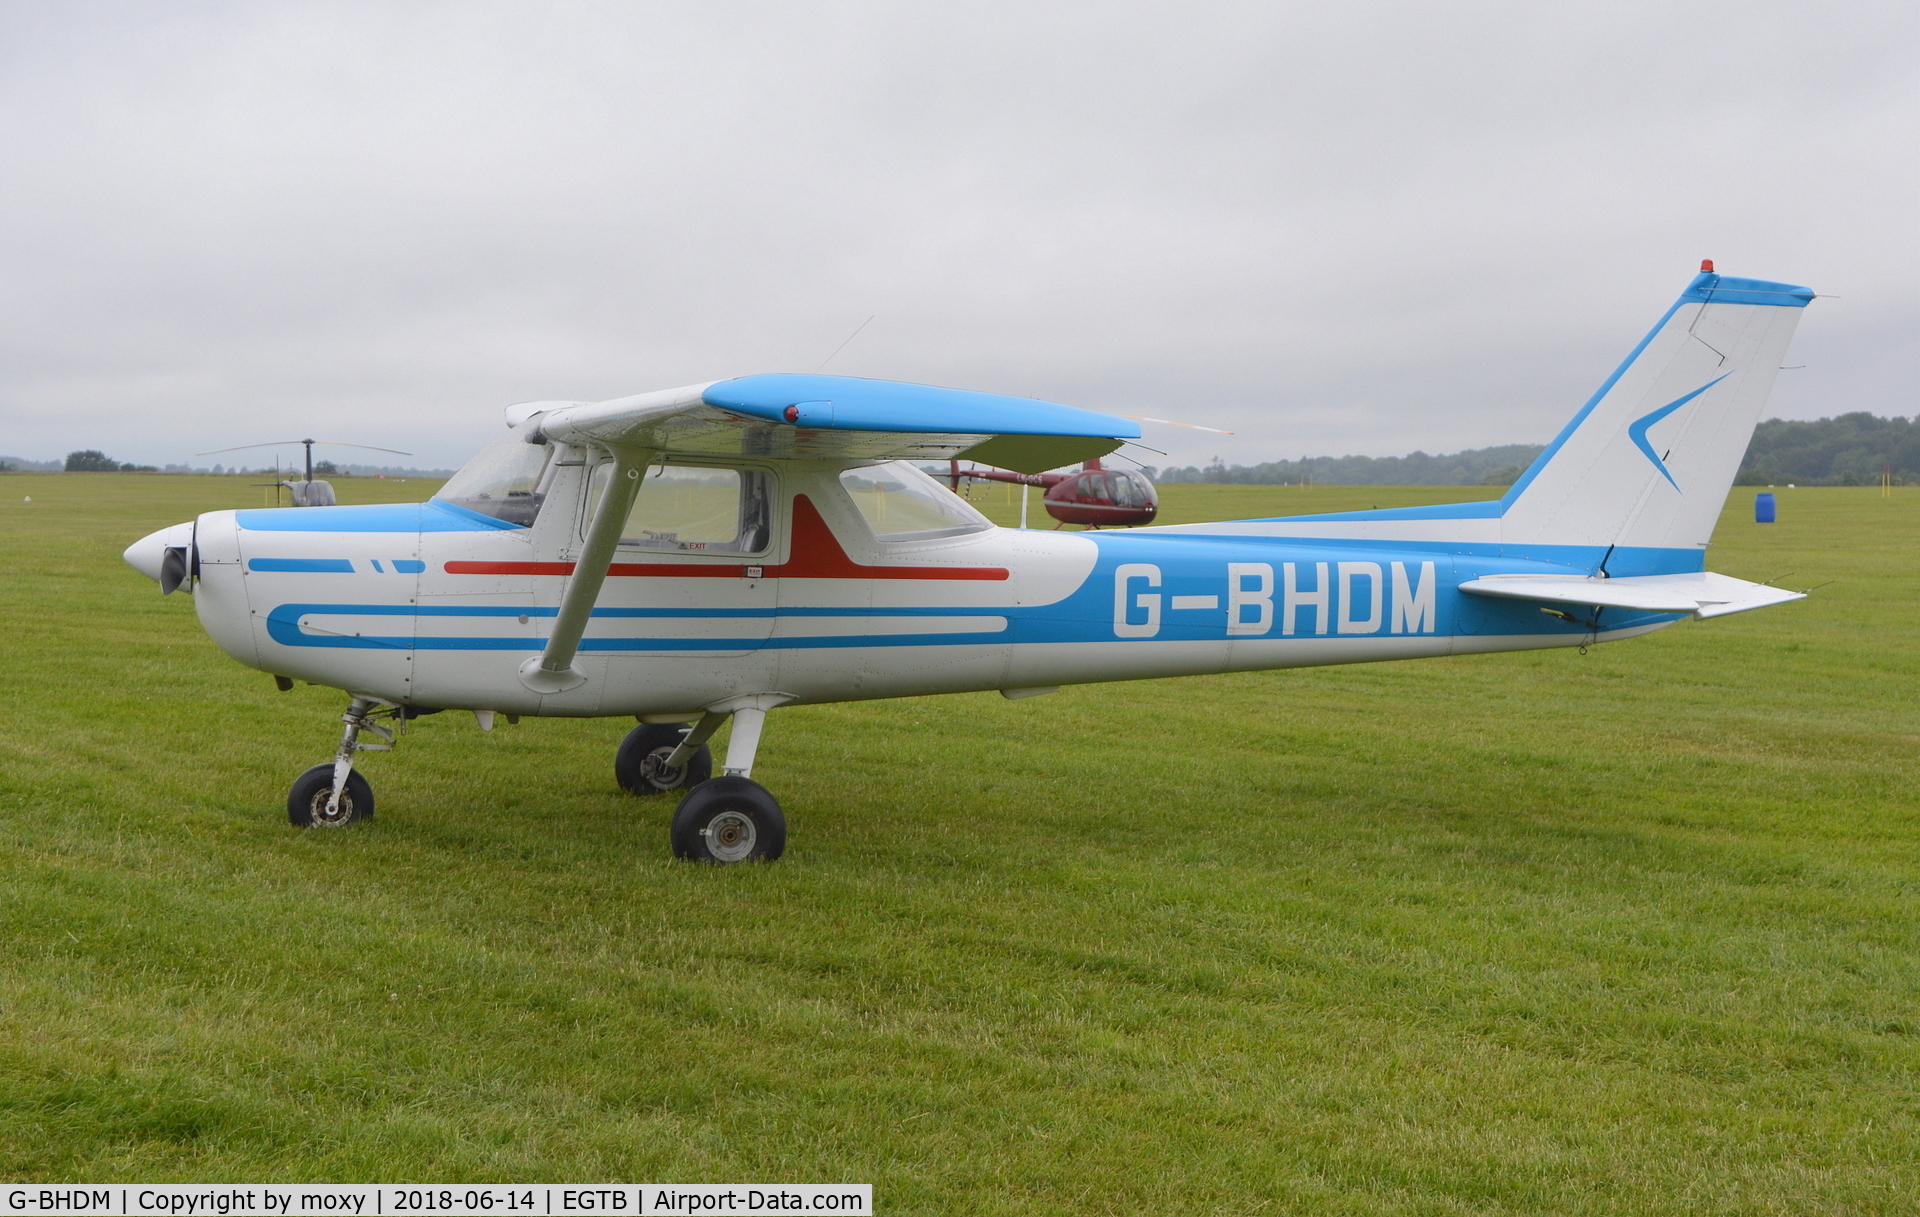 G-BHDM, 1979 Reims F152 C/N 1684, Reims Cessna F152 at Wycombe Air Park.